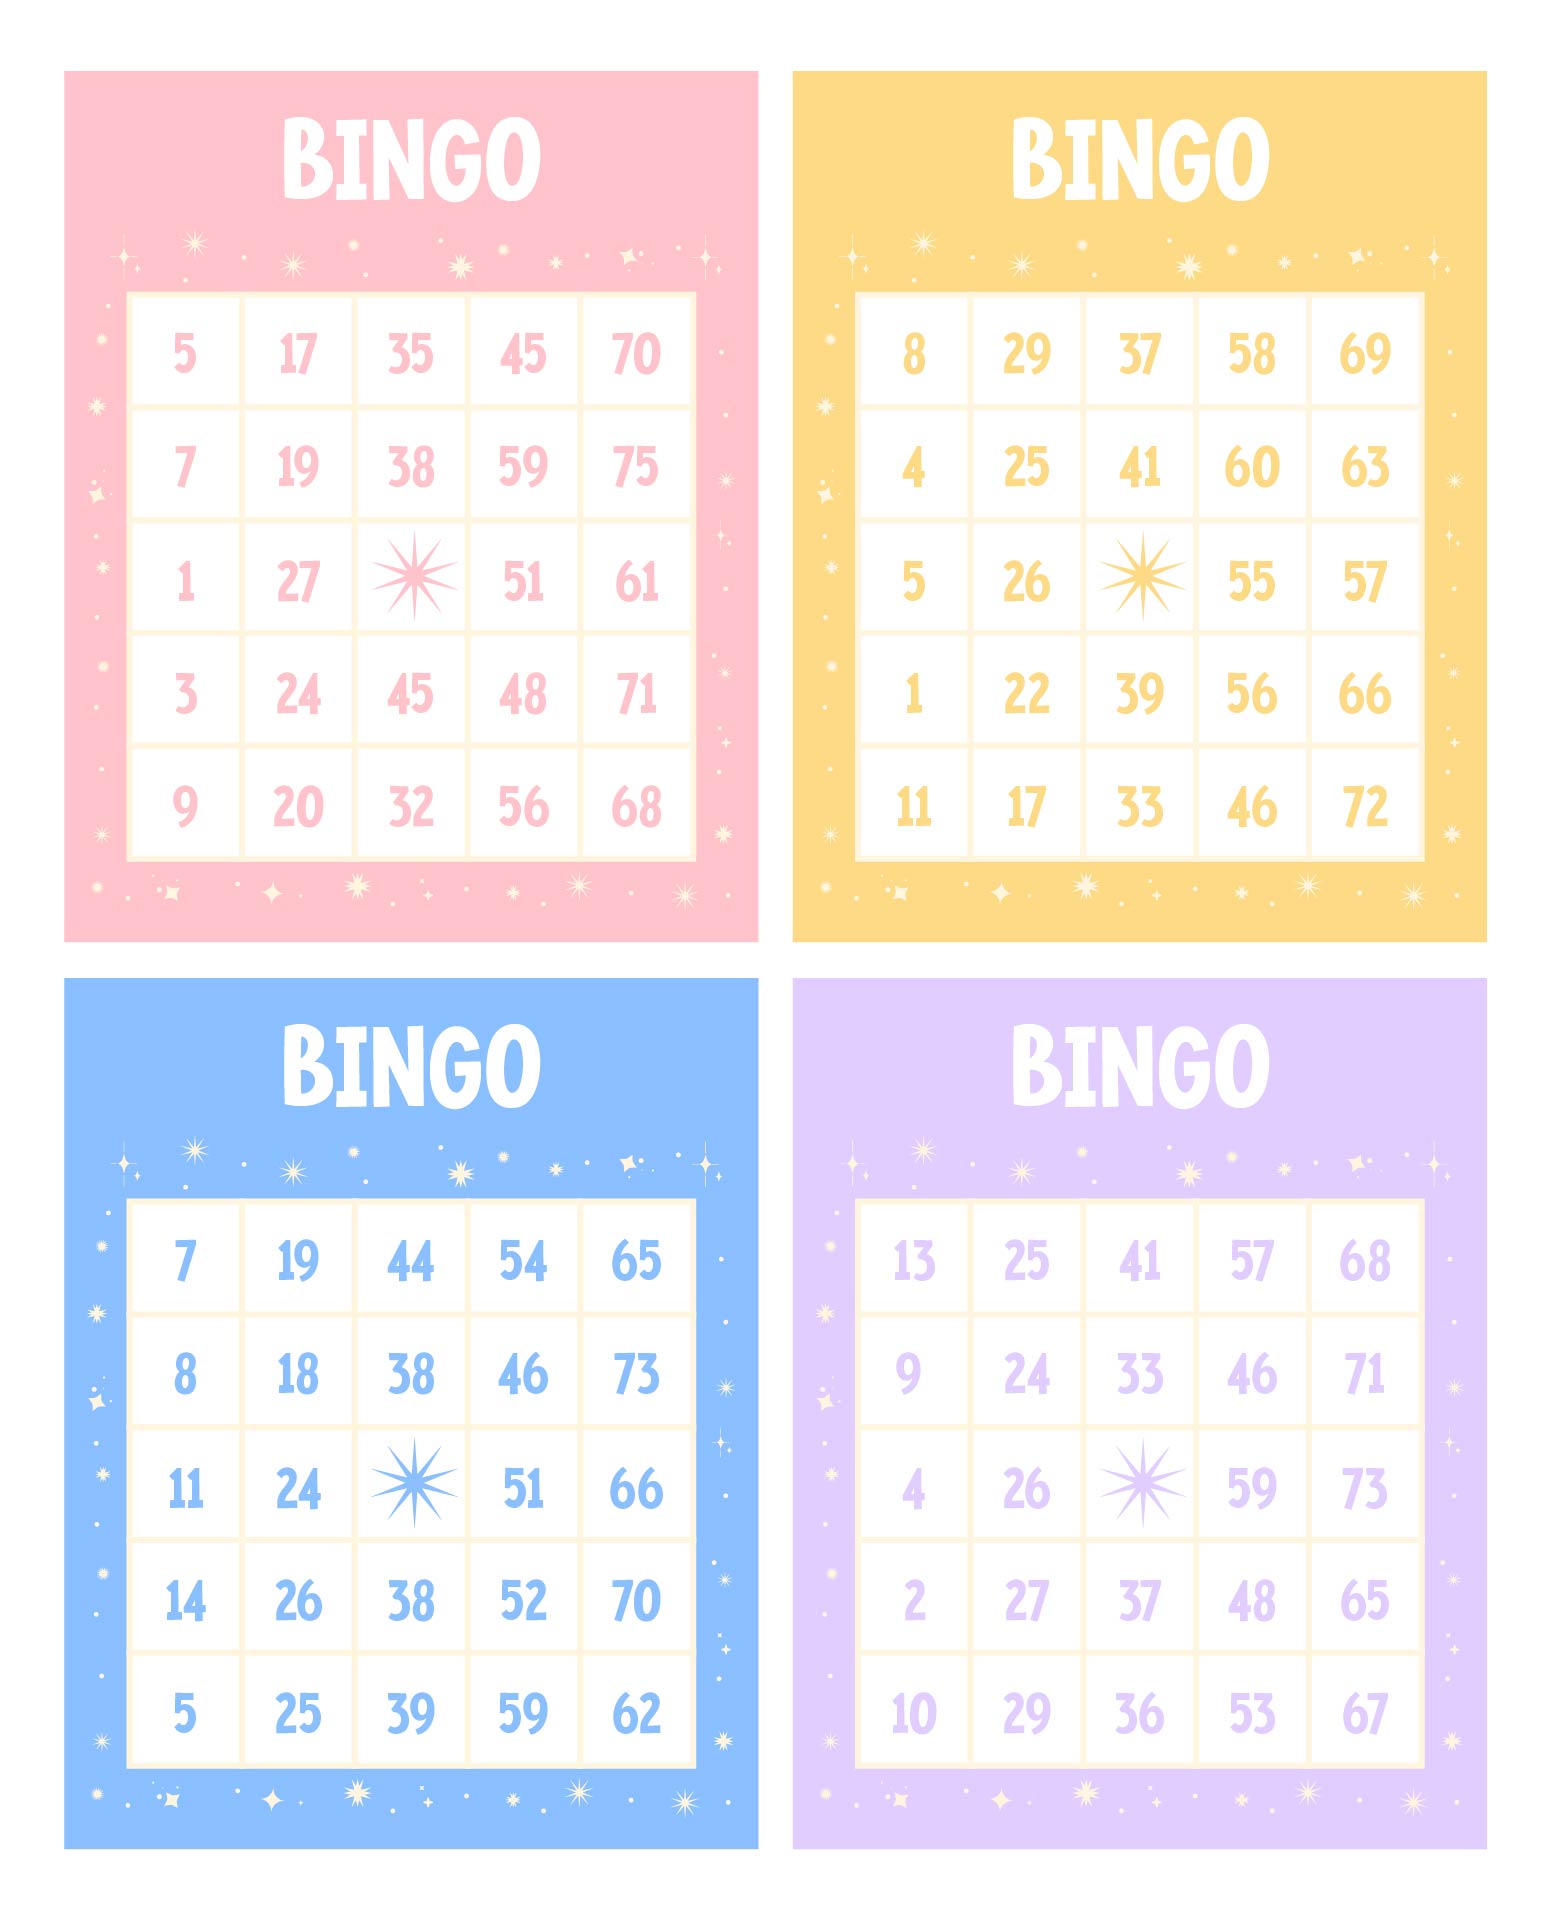 bingo-cards-to-print-free-bingo-cards-super-lotto-bingo-tickets